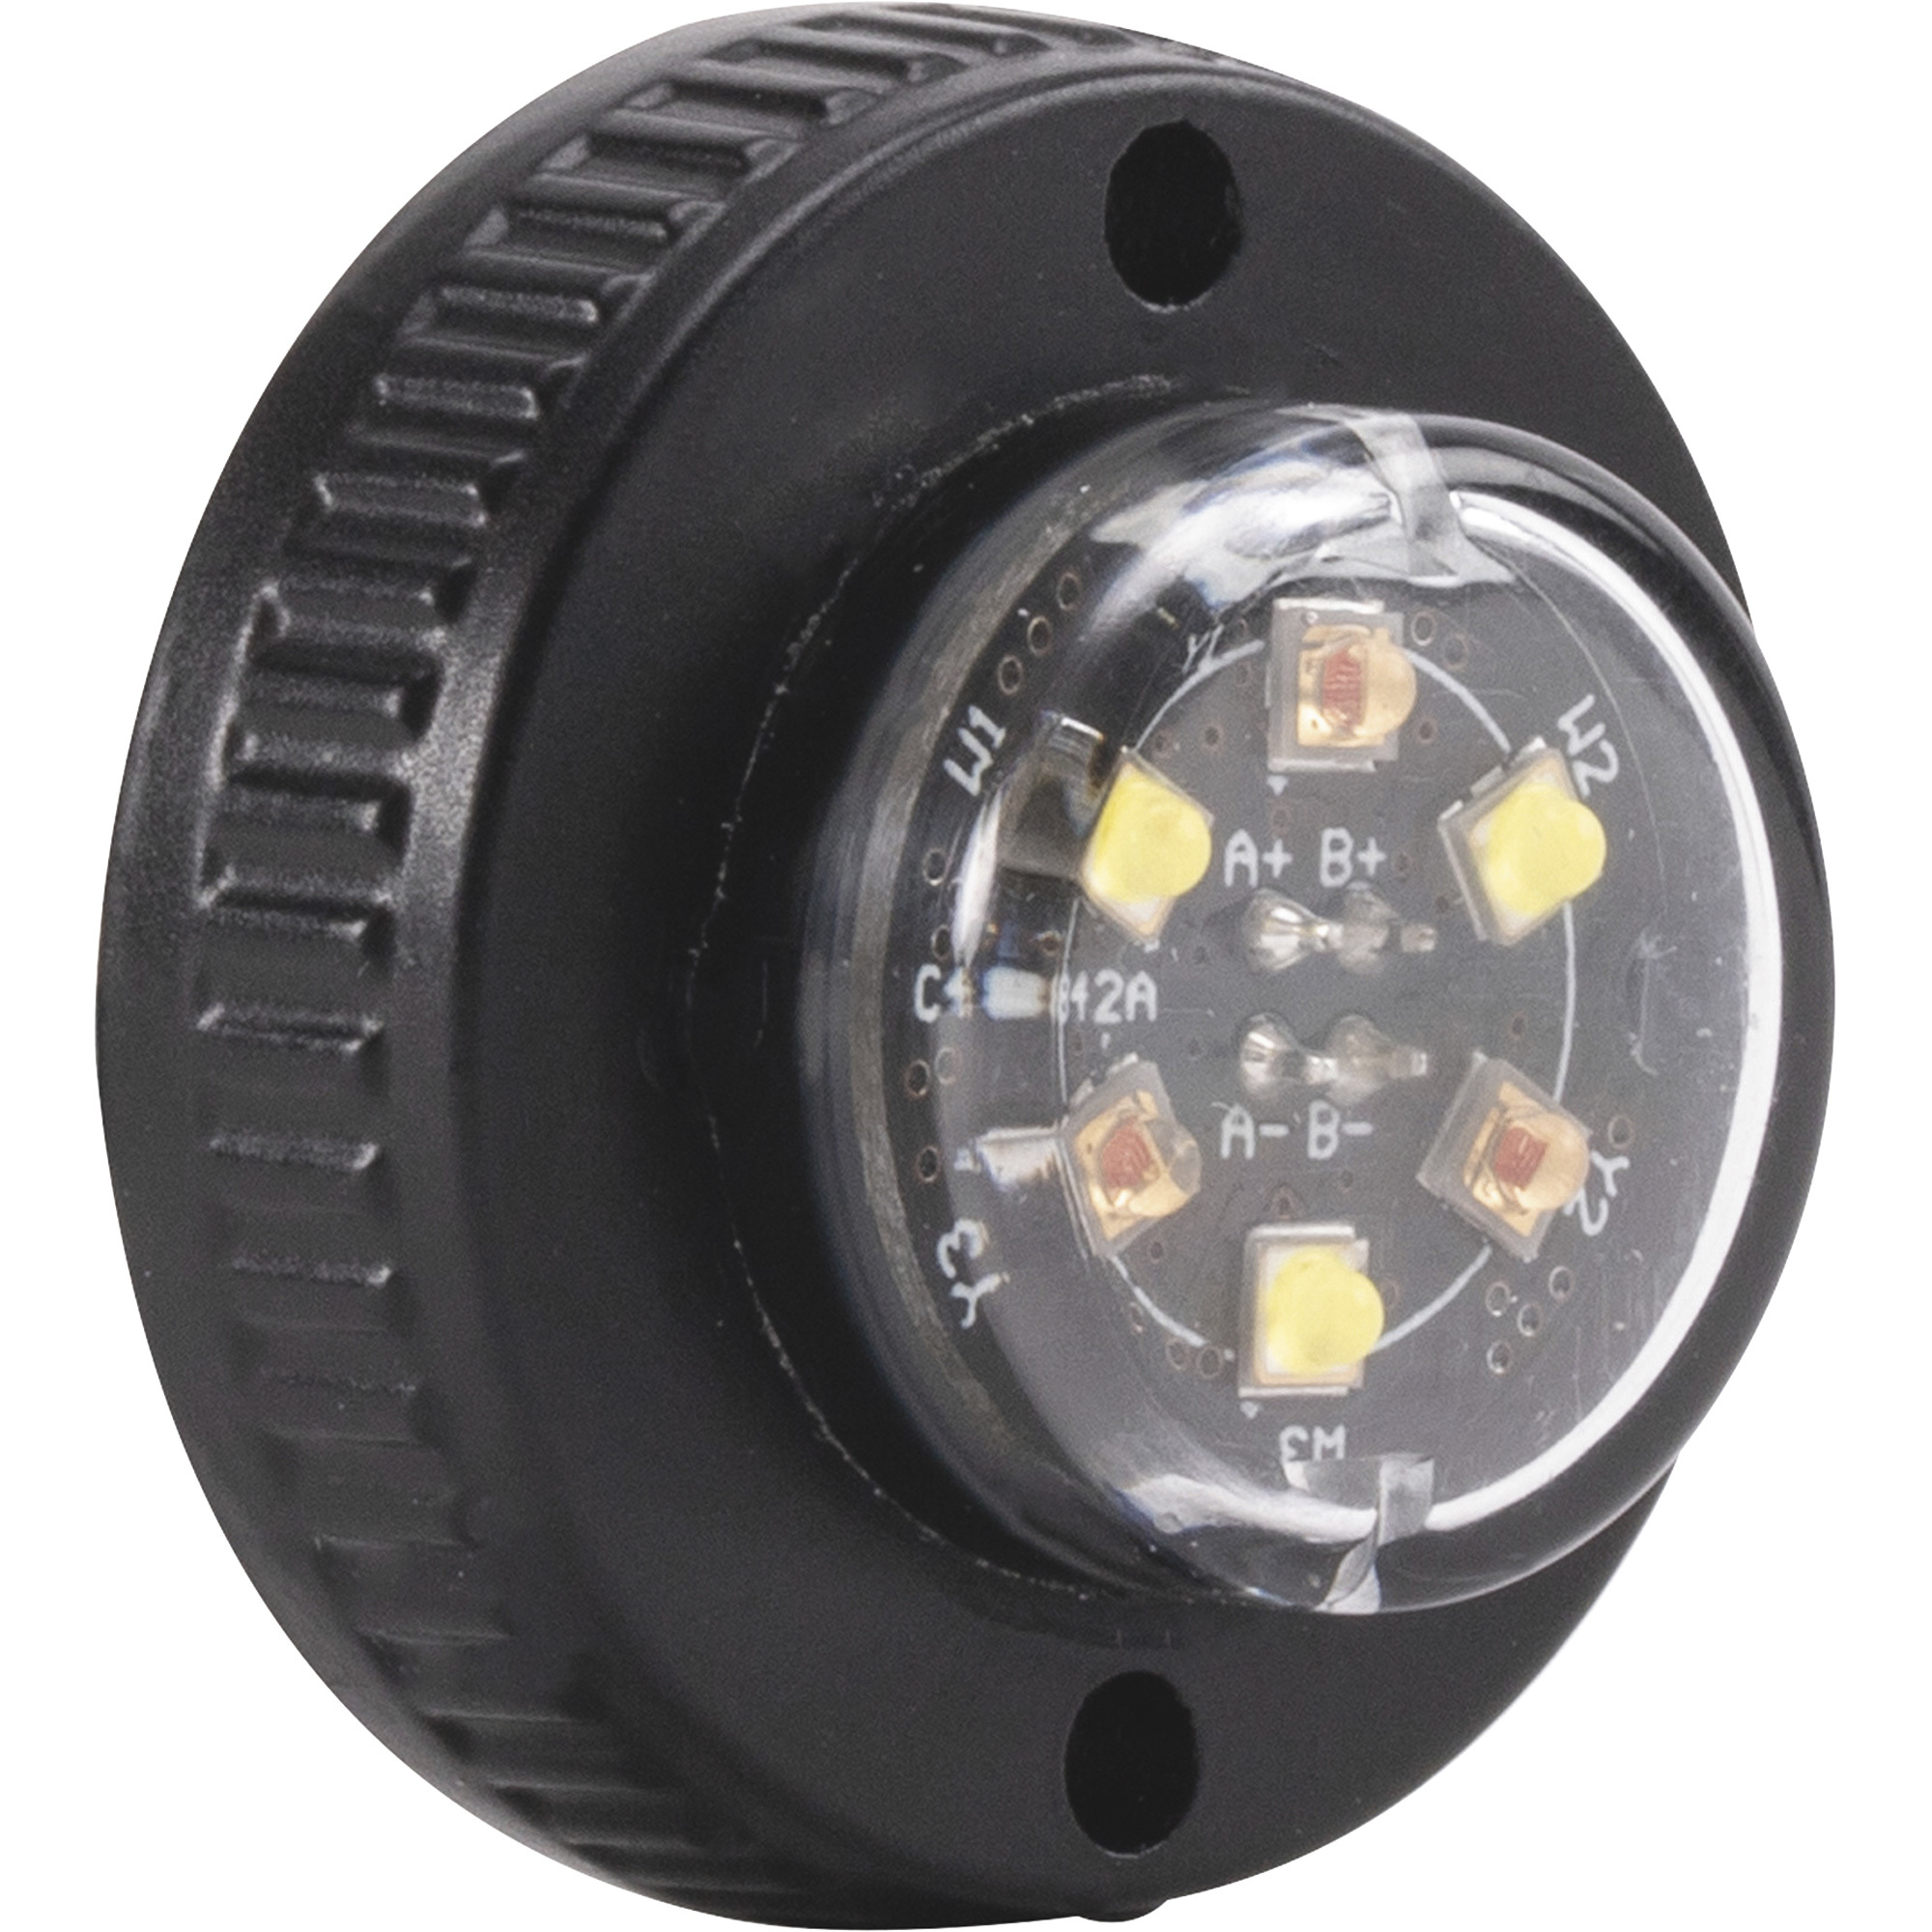 Blazer LED Grille Mount Class 3 Strobe Lights â Pair, Round, 3 LEDs Per Light, 12V, Amber Lens/White LEDs, Grille or Surface Mount, Model C4842